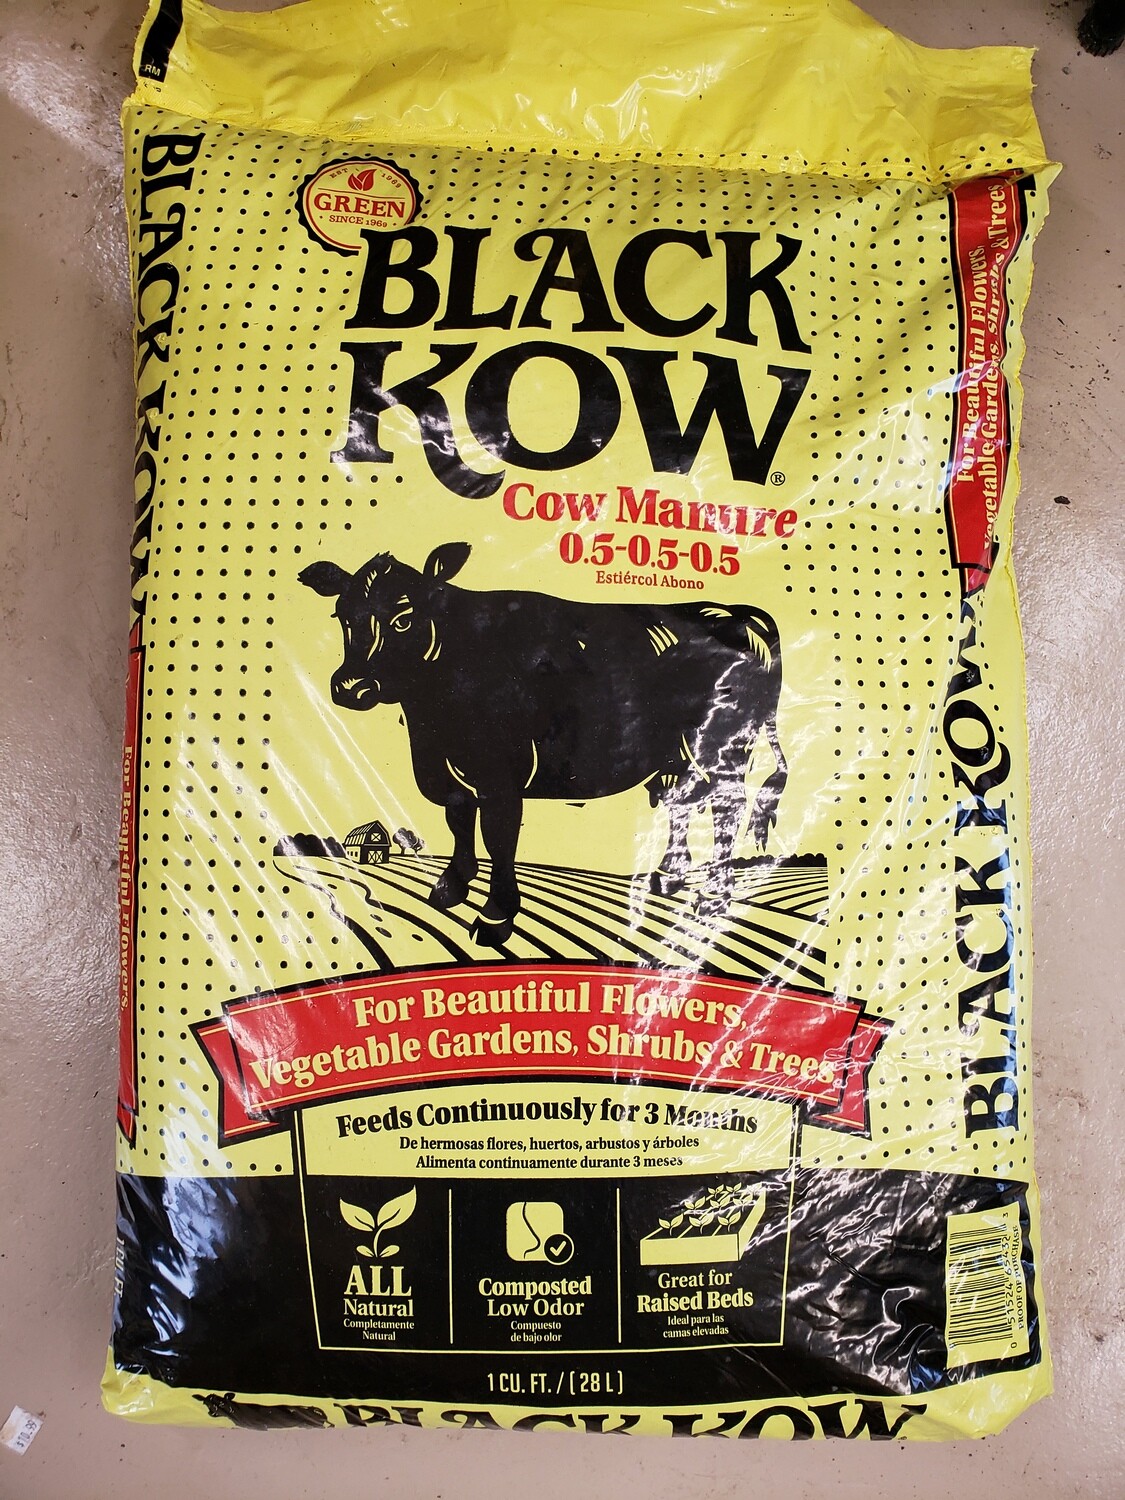 Black Kow Cow Manure